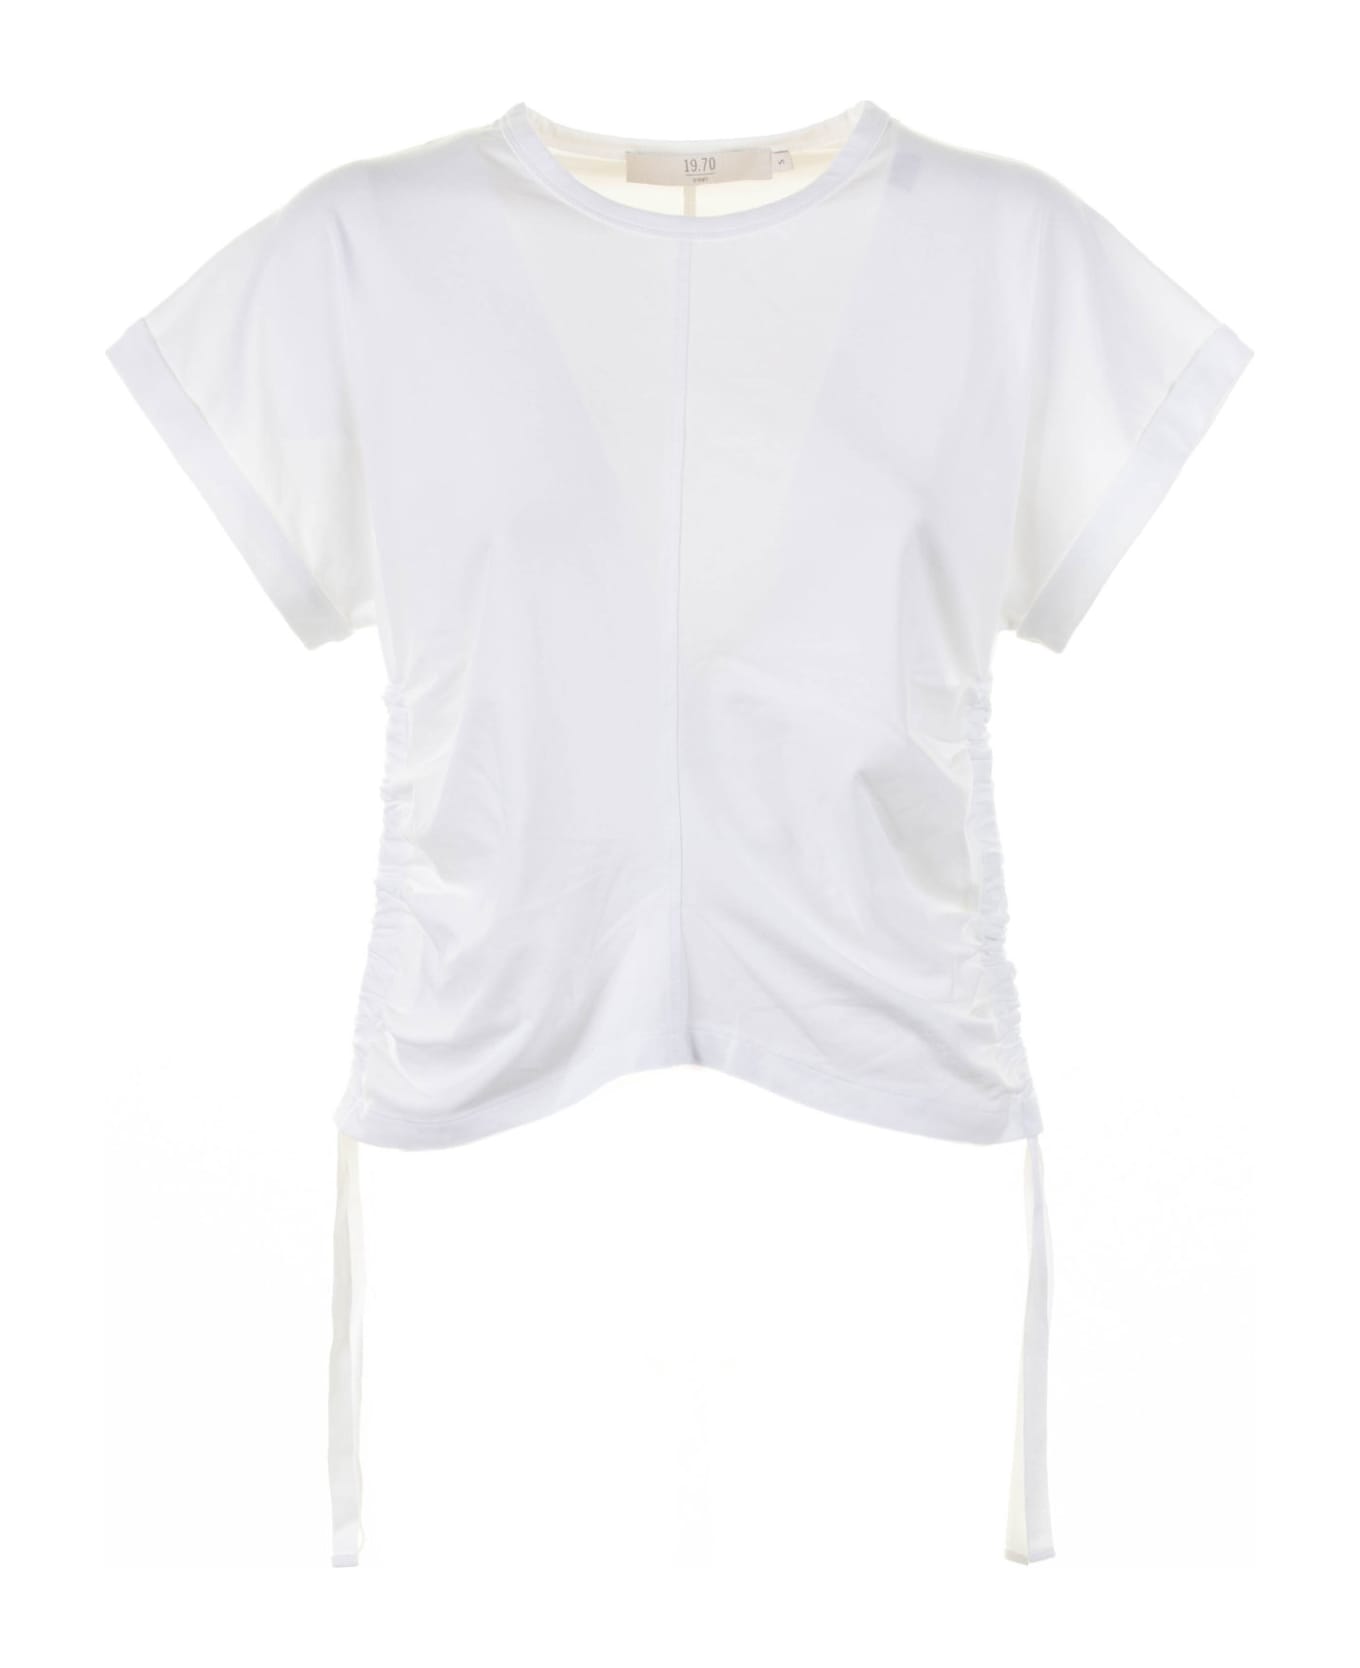 19.70 Nineteen Seventy T-shirt Whit Adjustable Side Gathering - BIANCO